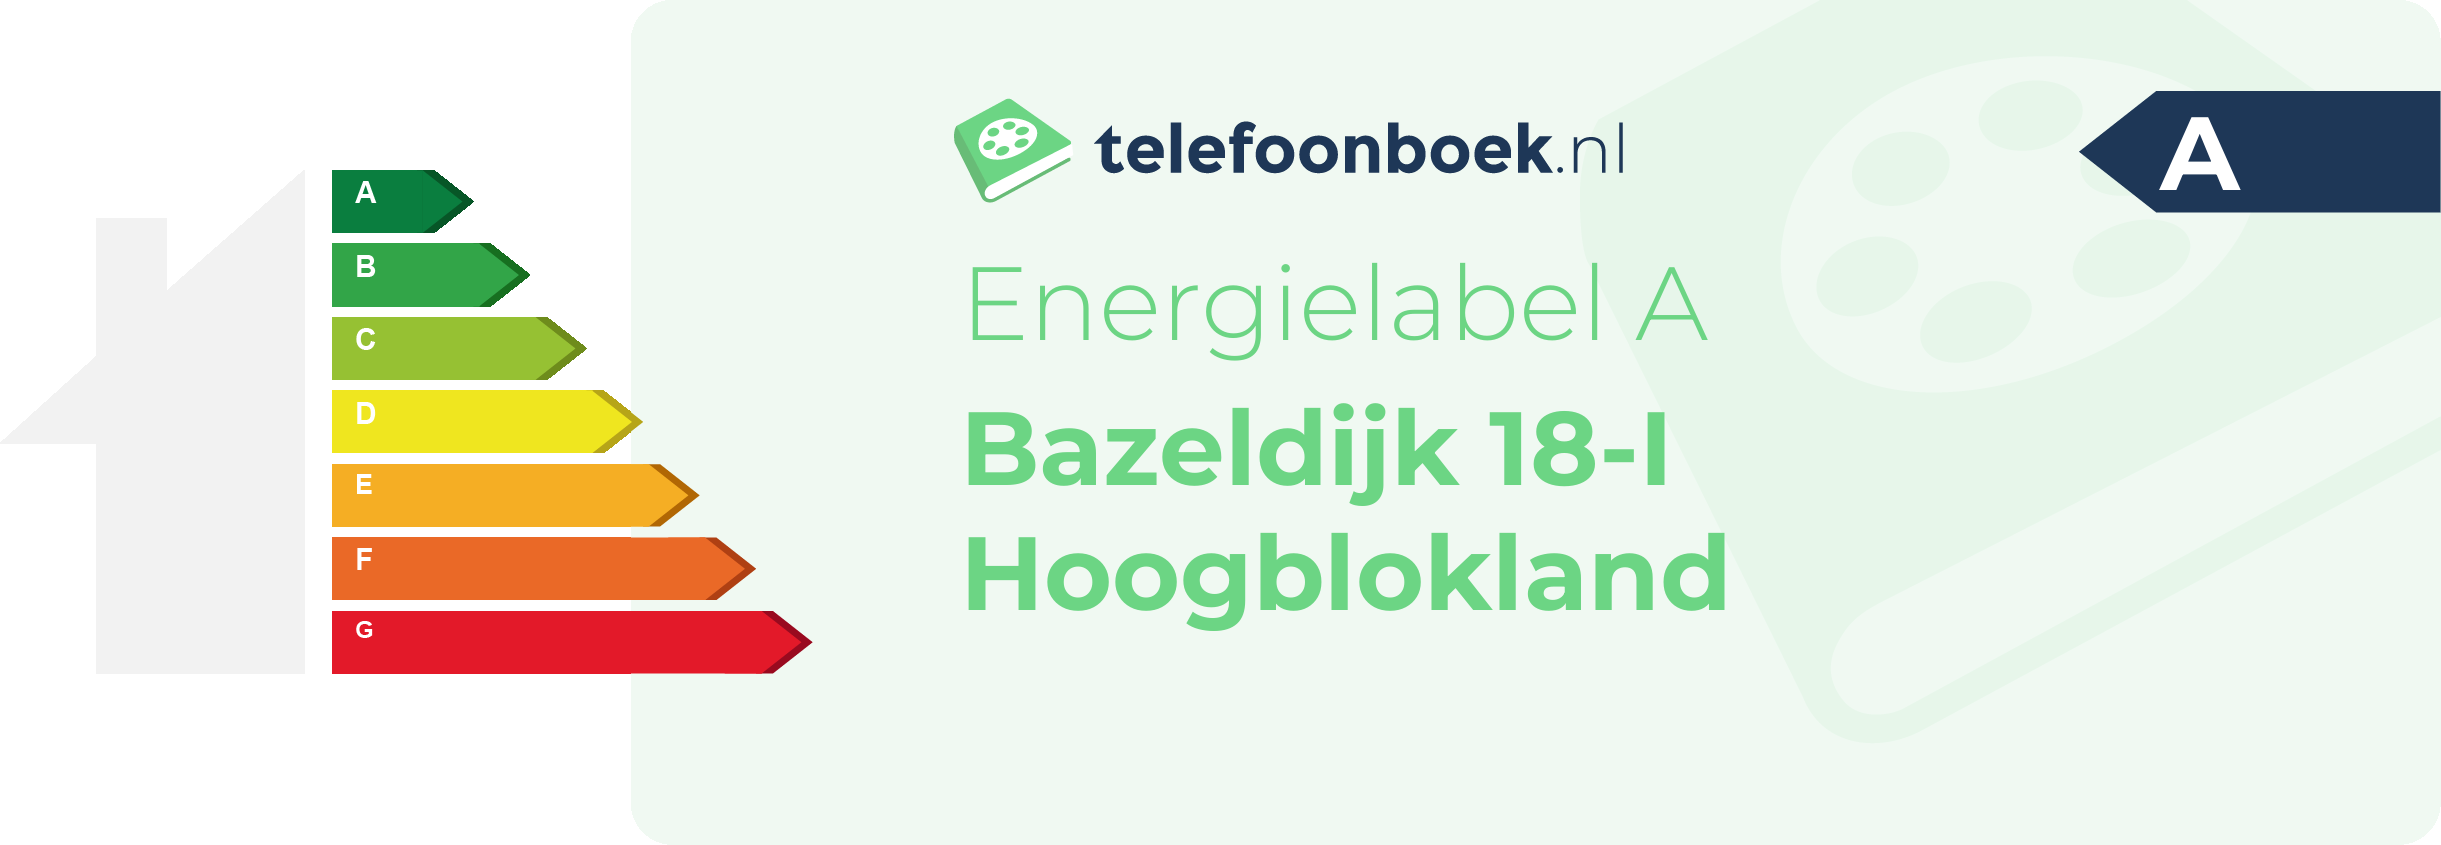 Energielabel Bazeldijk 18-I Hoogblokland